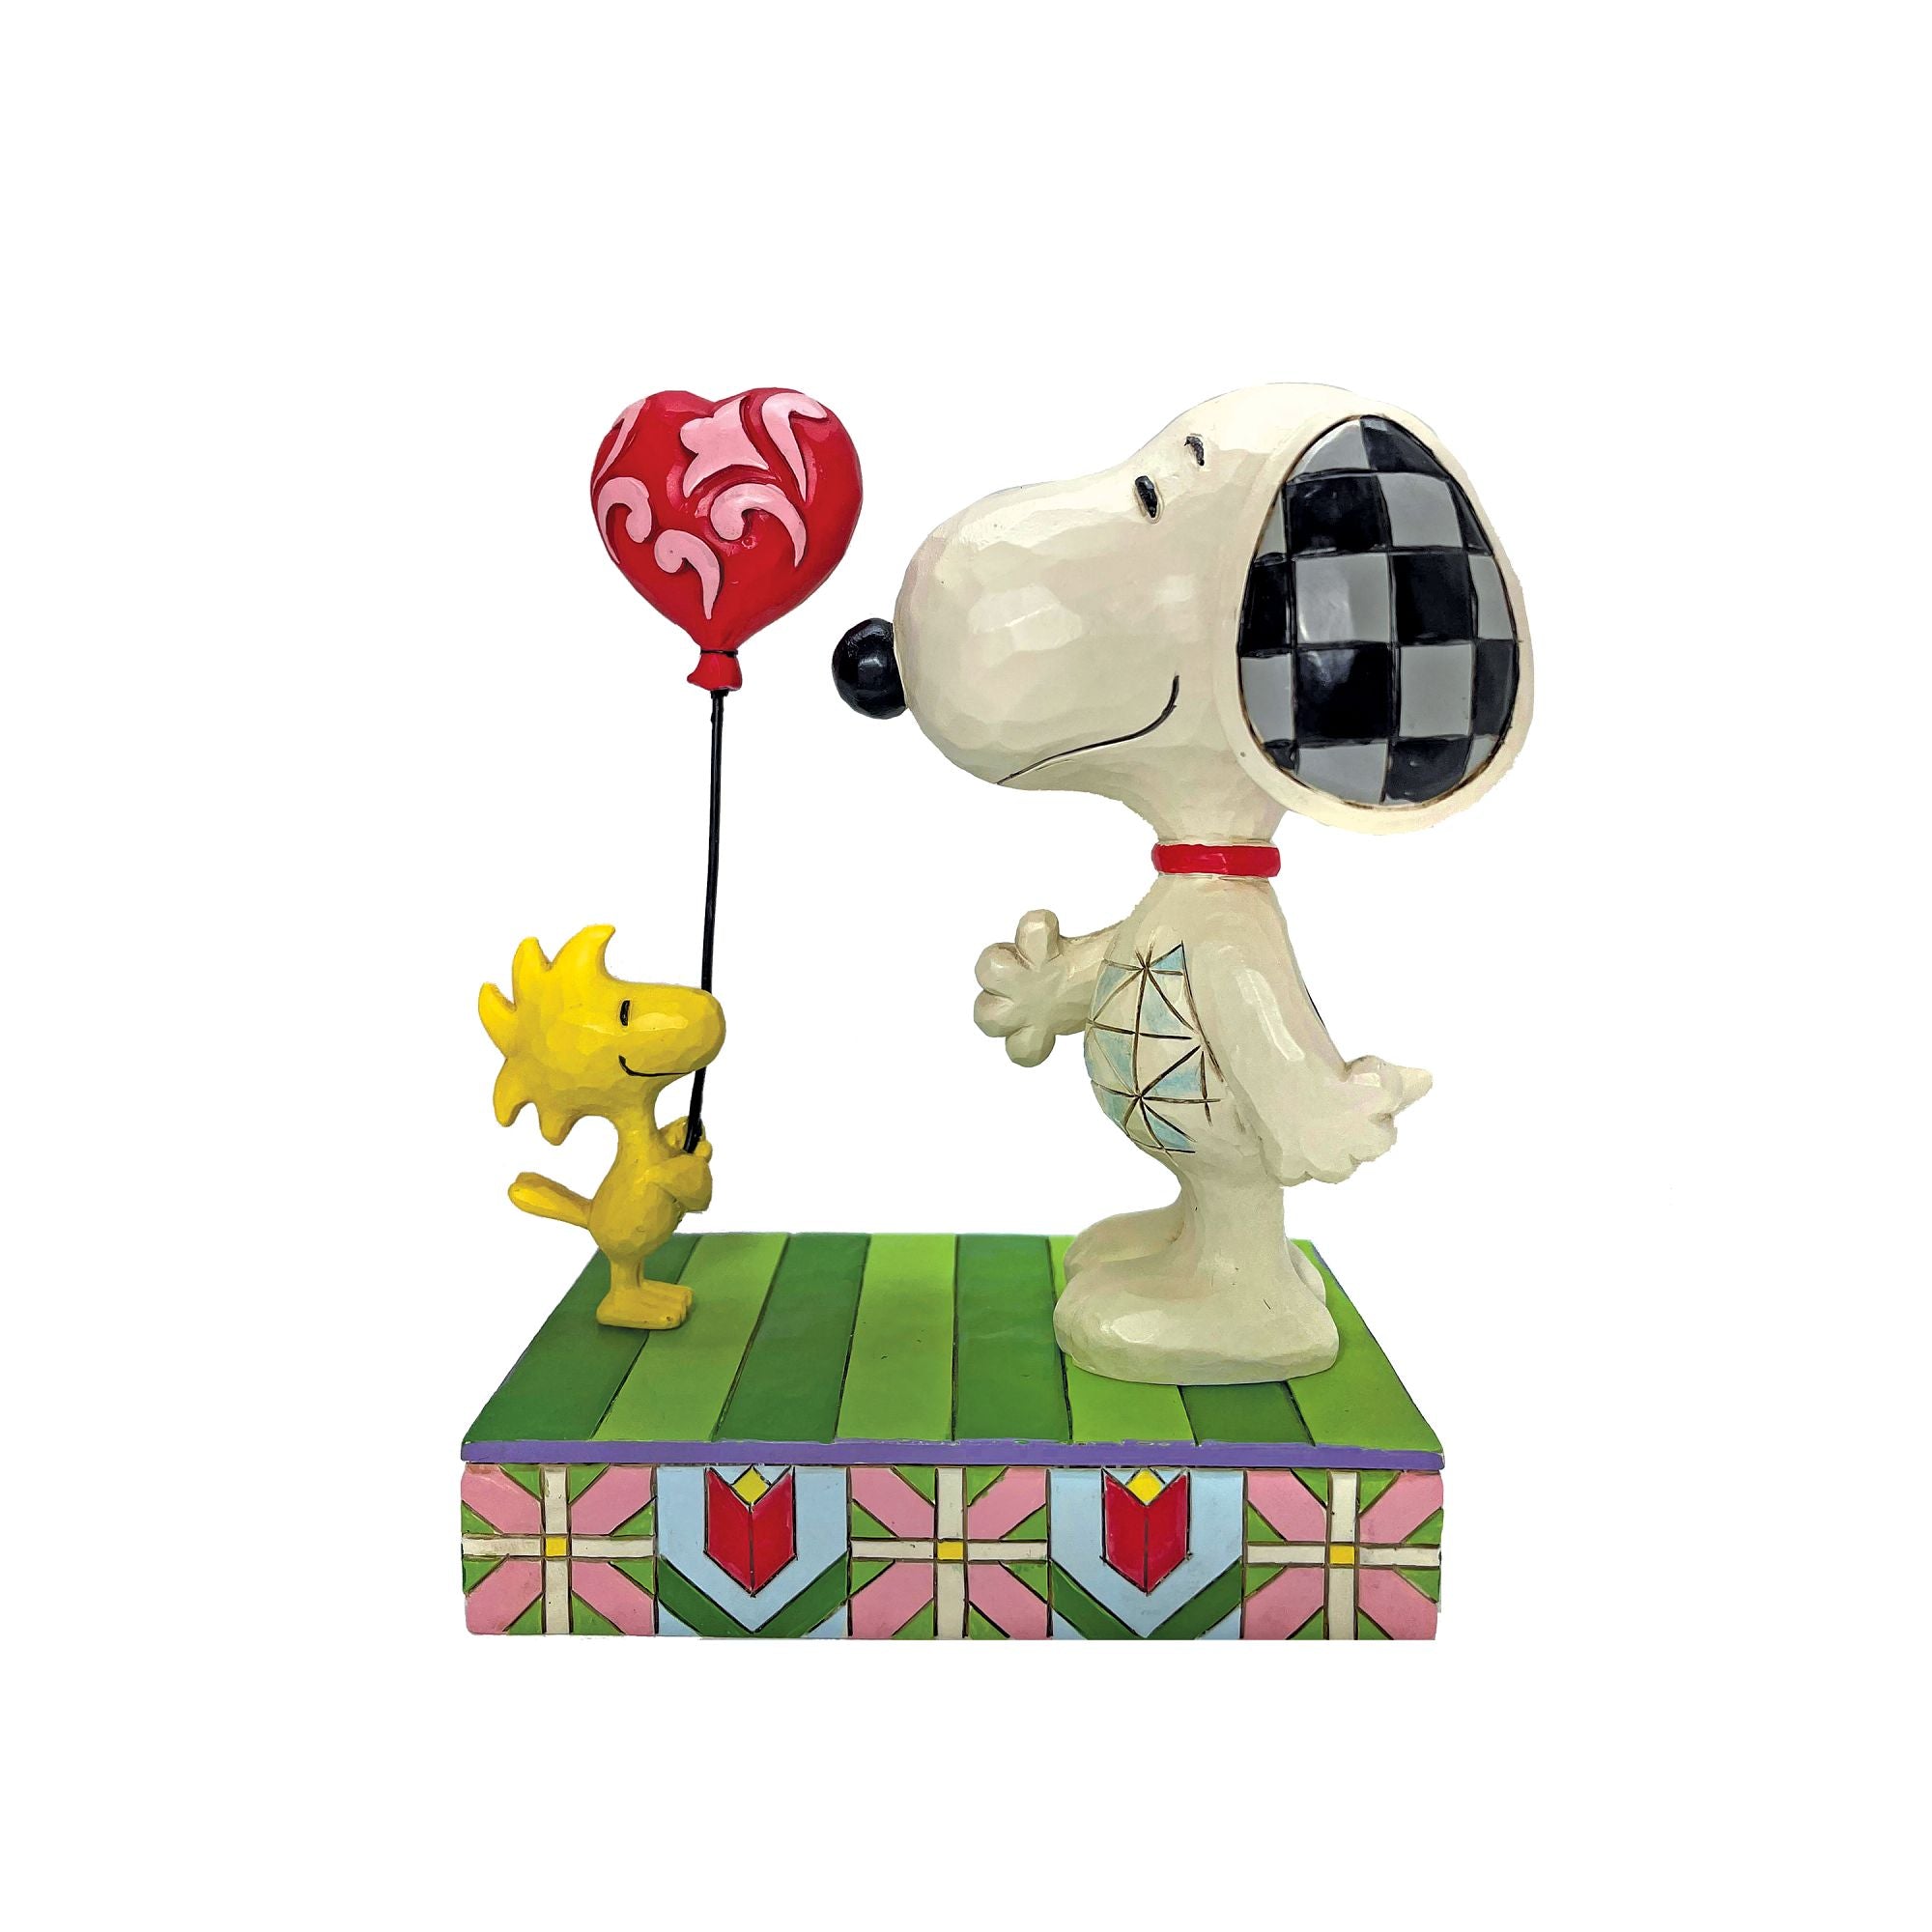 Woodstock giving Snoopy Heart